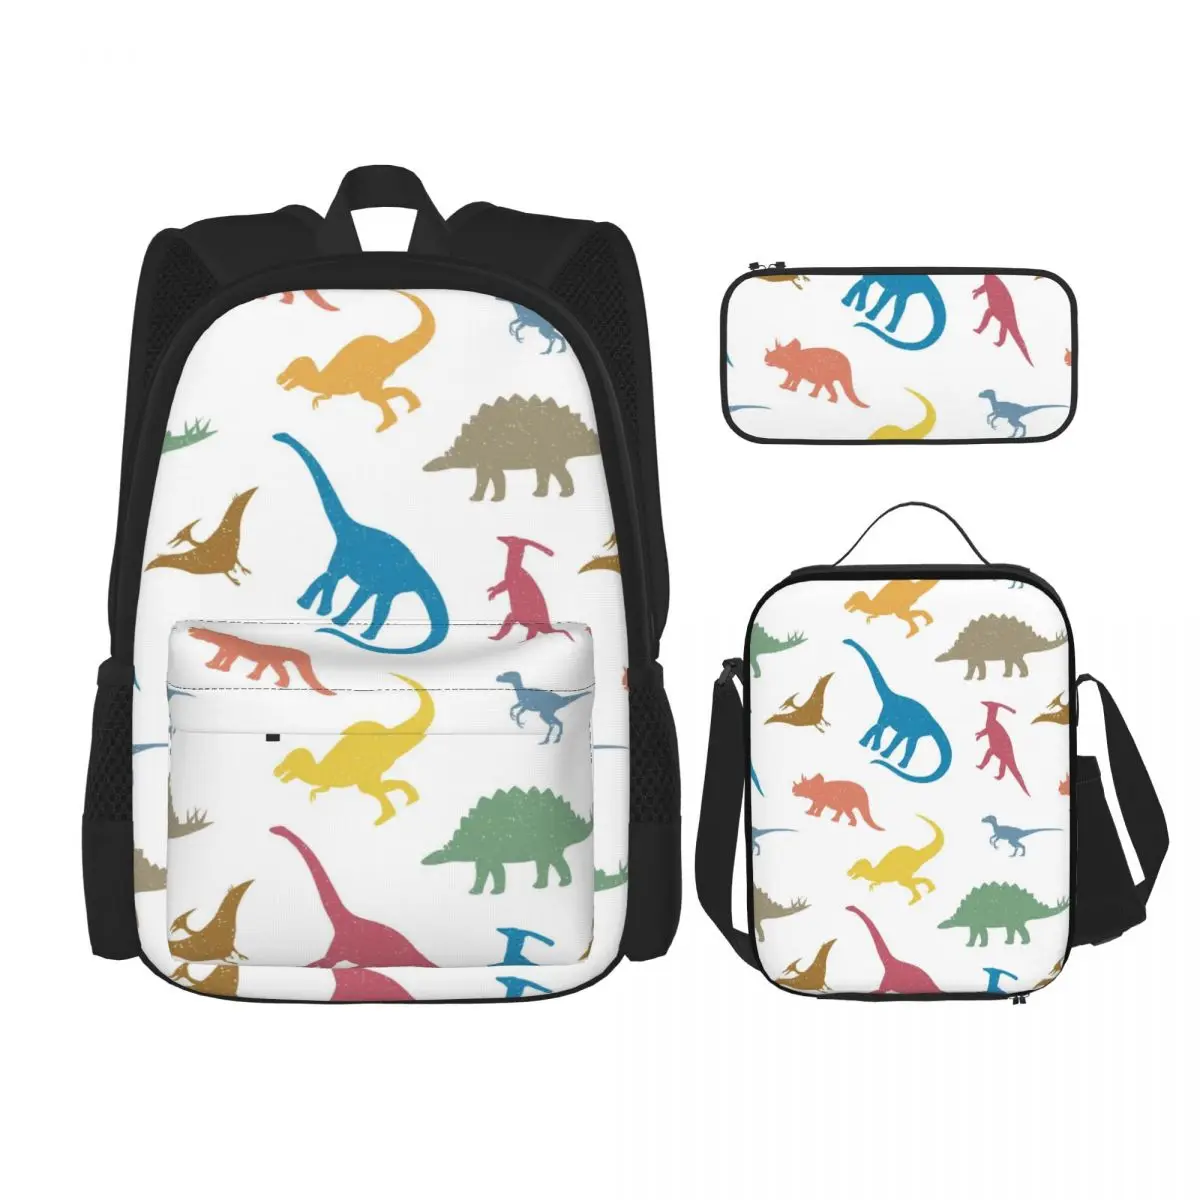 

3 Pcs/Set School Backpack for Girls Children Schoolbags Kids School Pencil Case Lunchbox Seamless Pattern Dinosaur Silhouettes